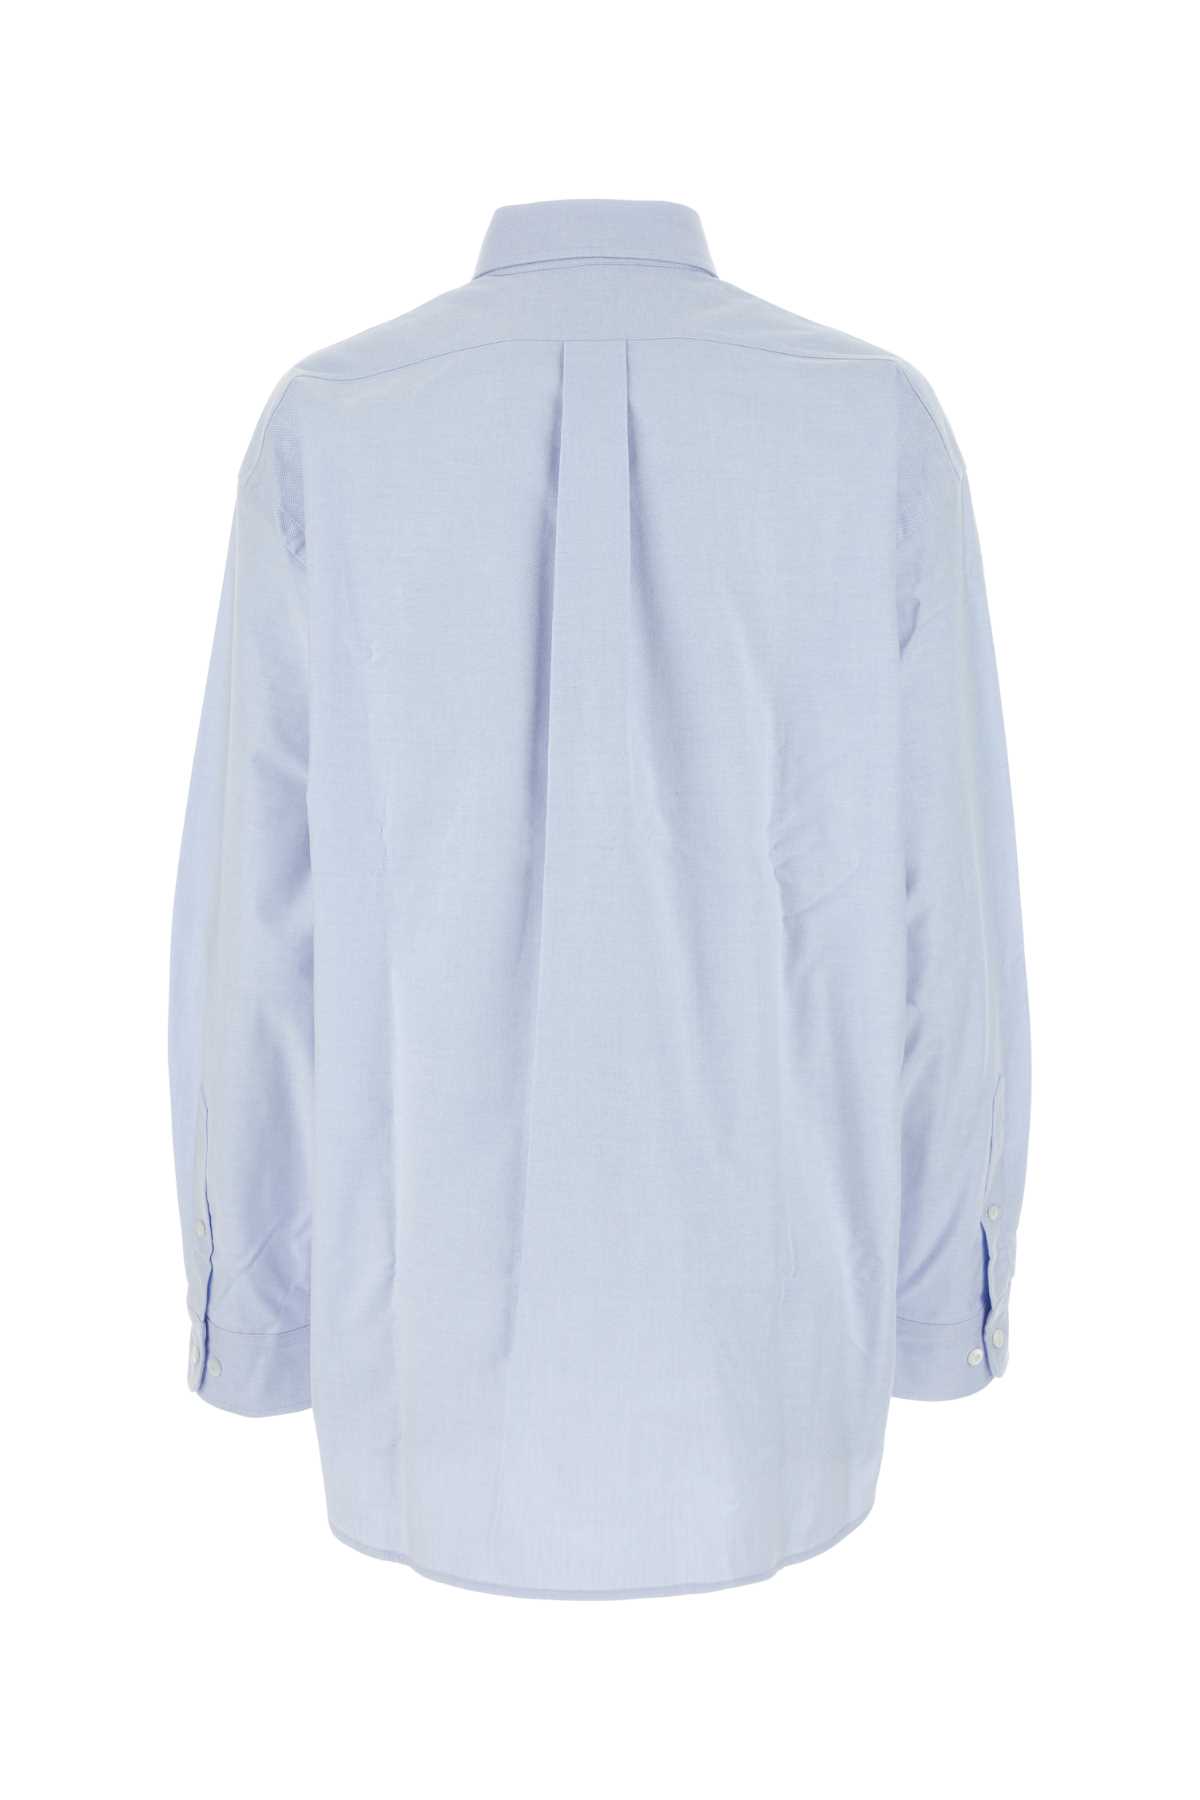 Prada Light Blue Oxford Oversize Shirt